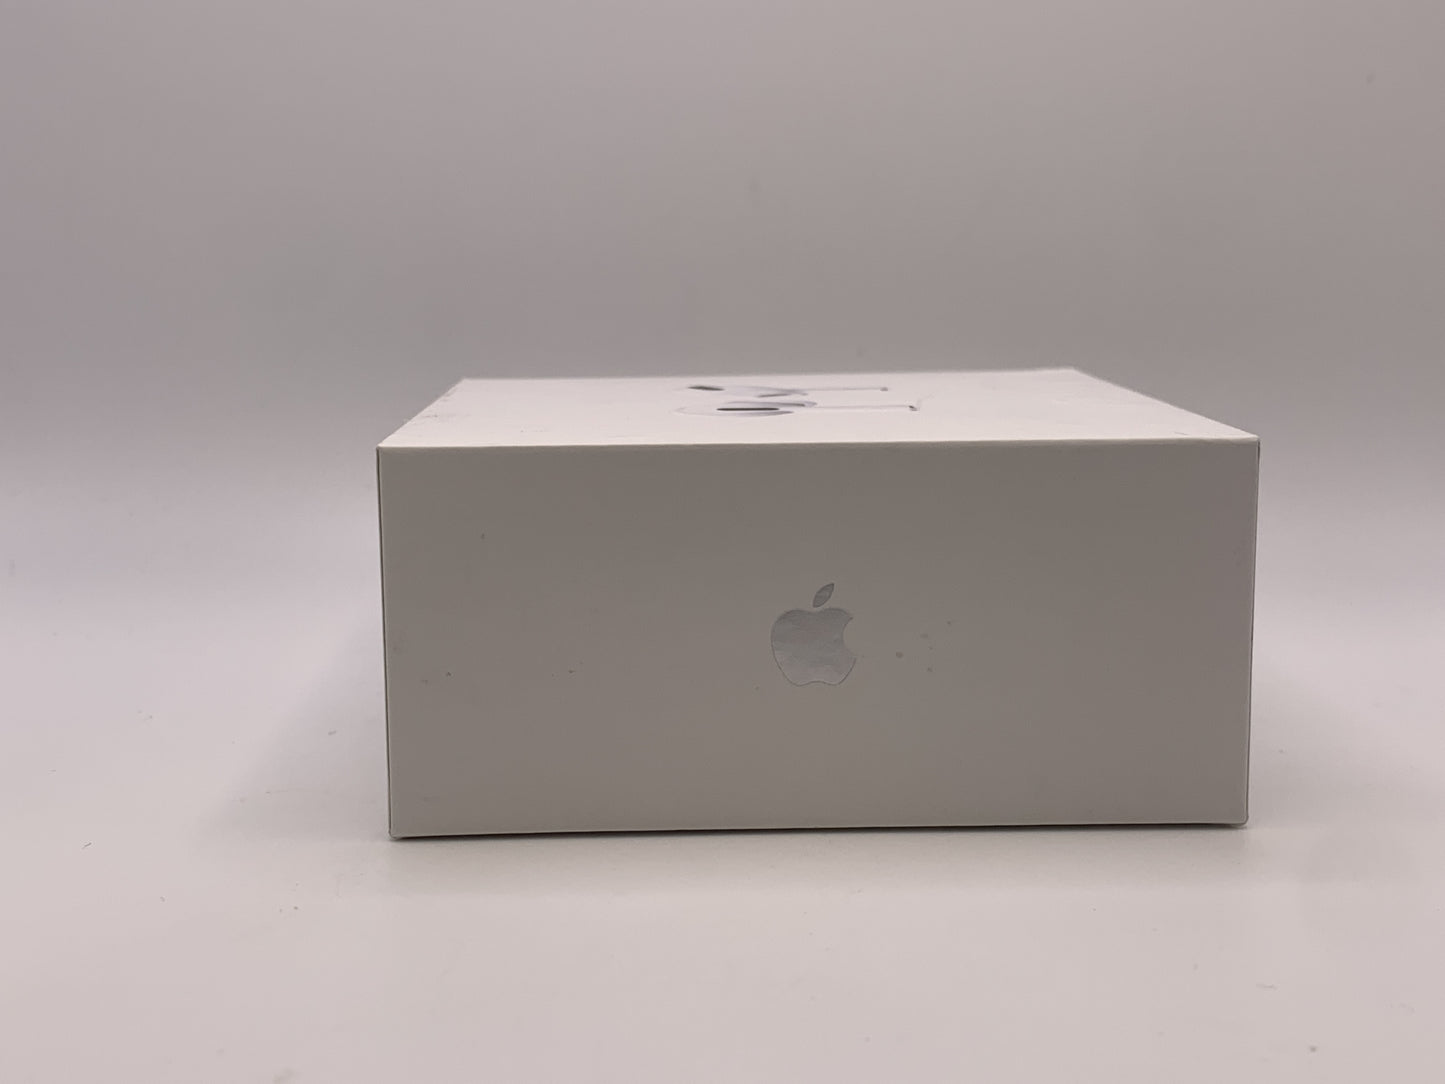 Apple AirPod Pro - In Box